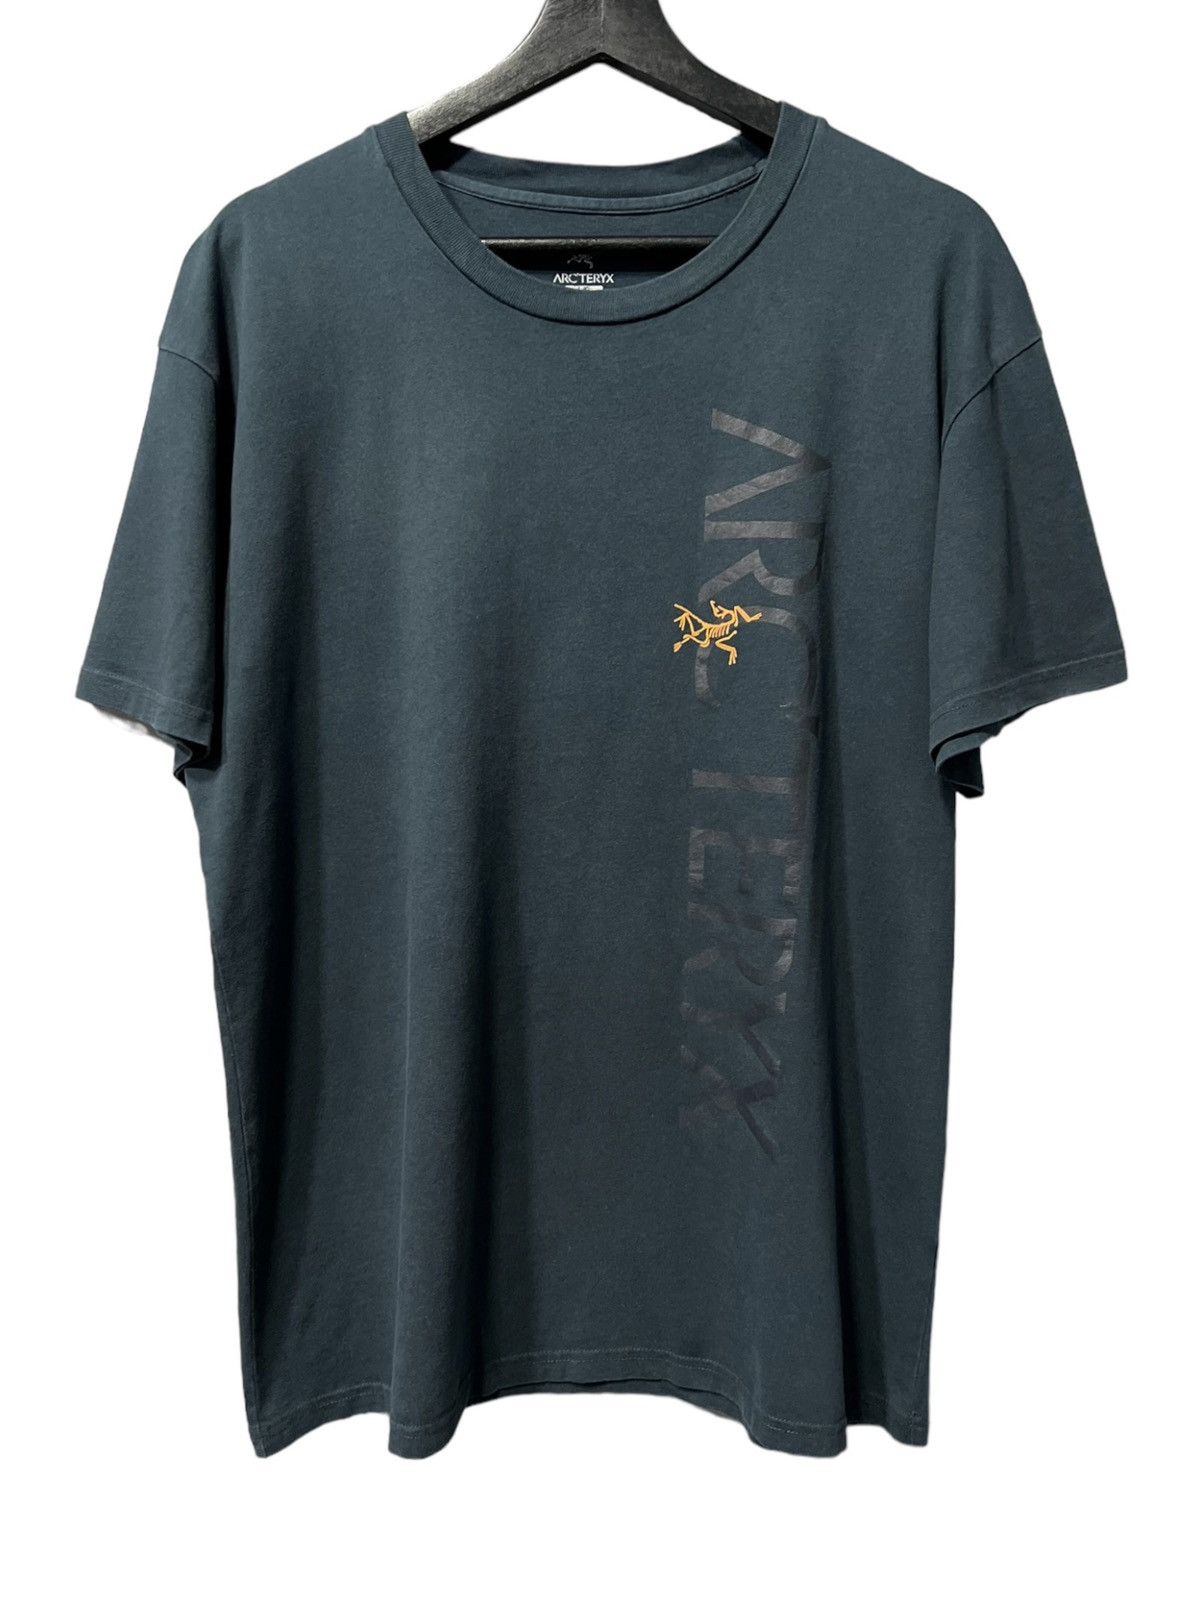 Arcteryx Shirt Vintage | Grailed